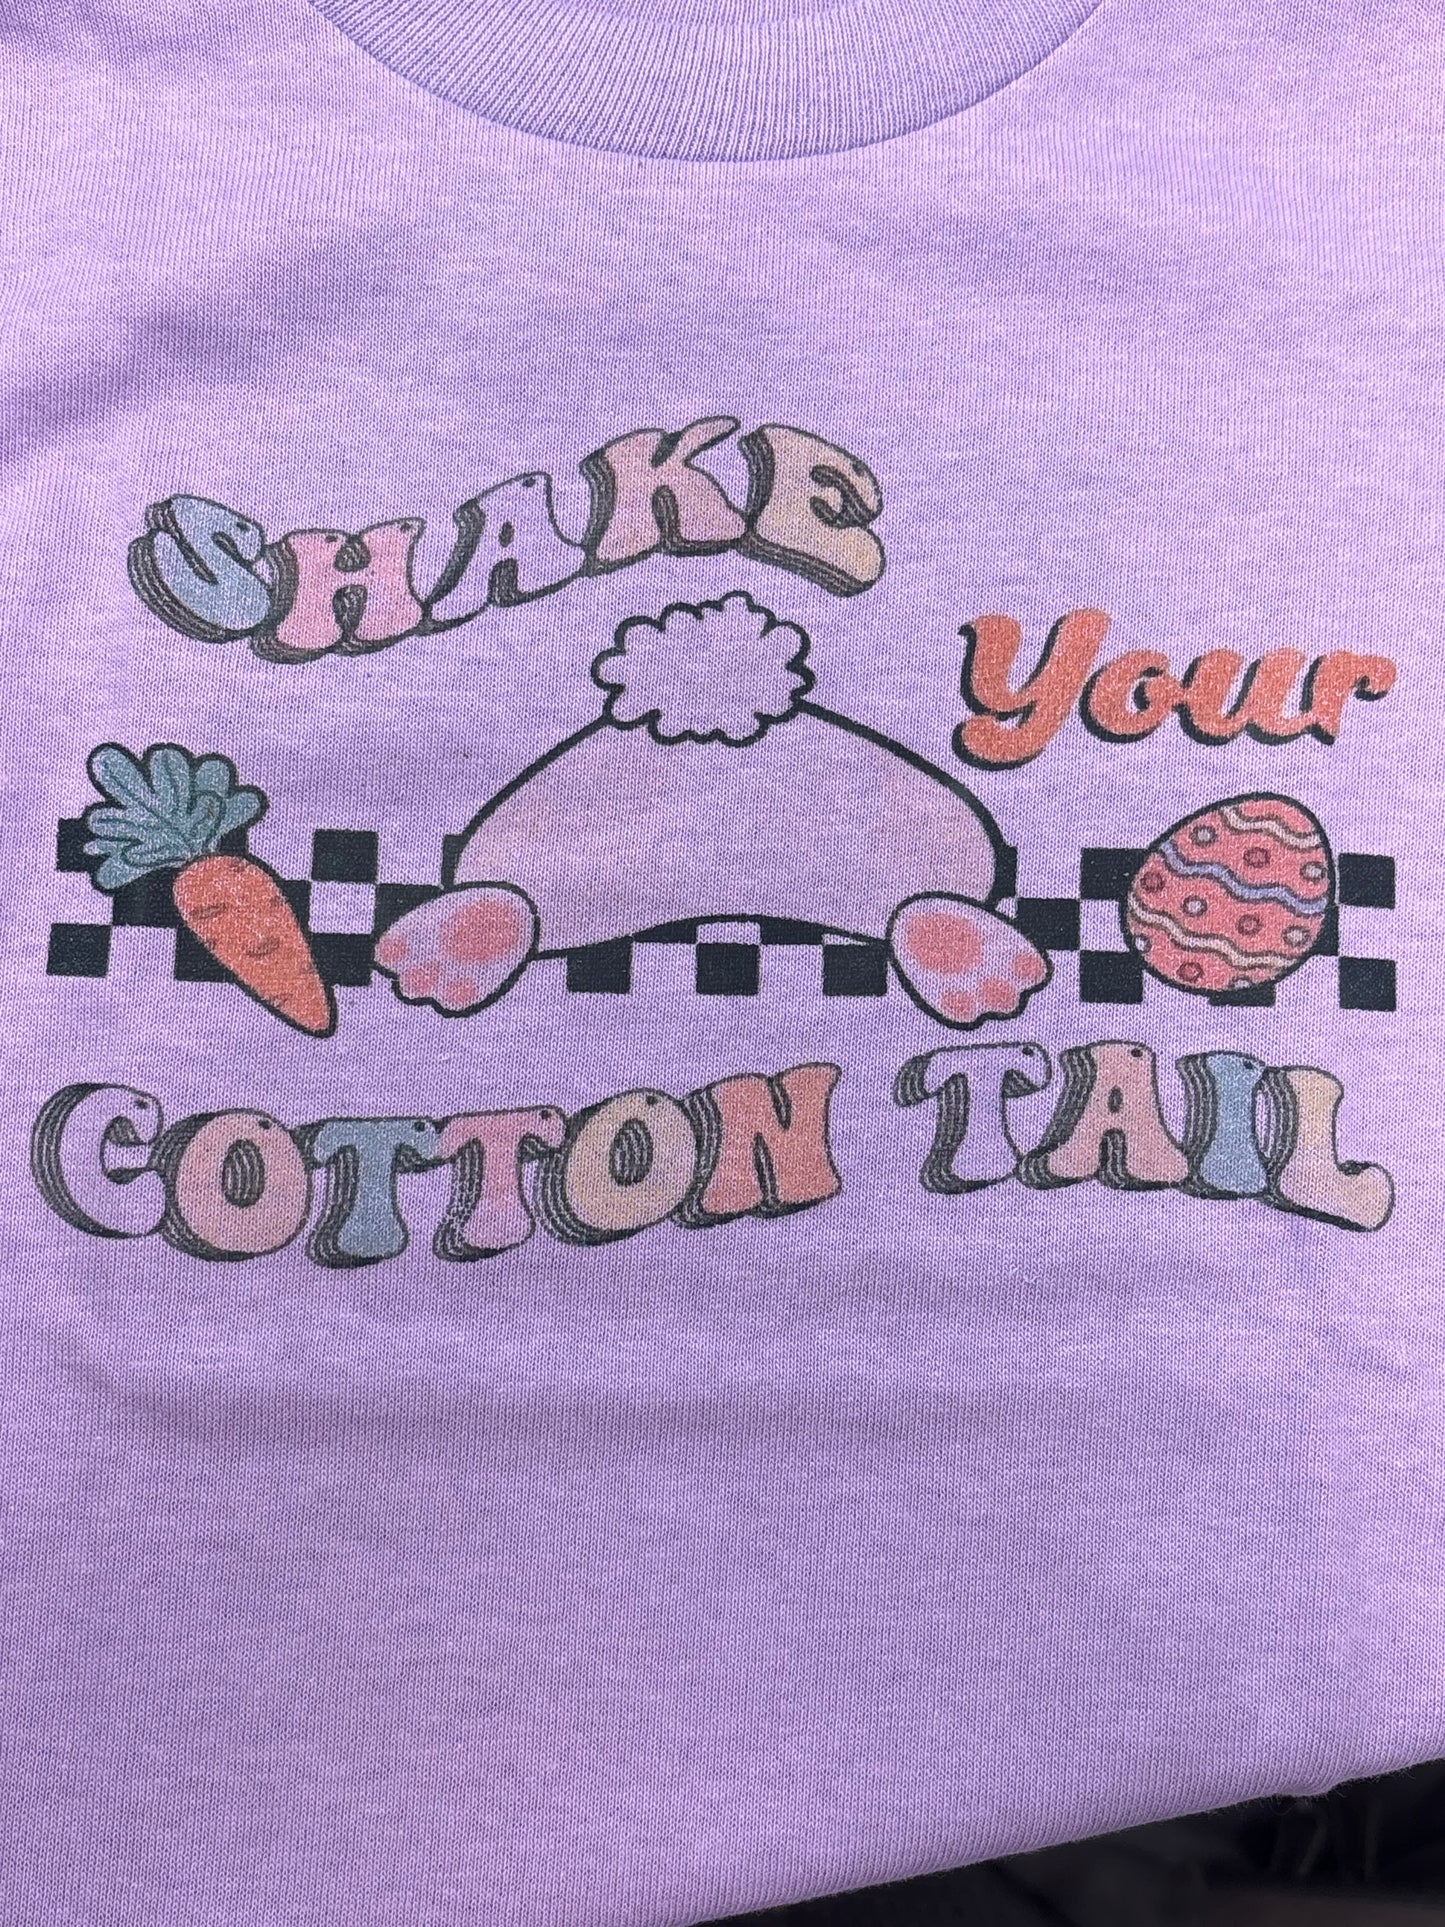 Kids Shake Your Cotton Tail Shirt